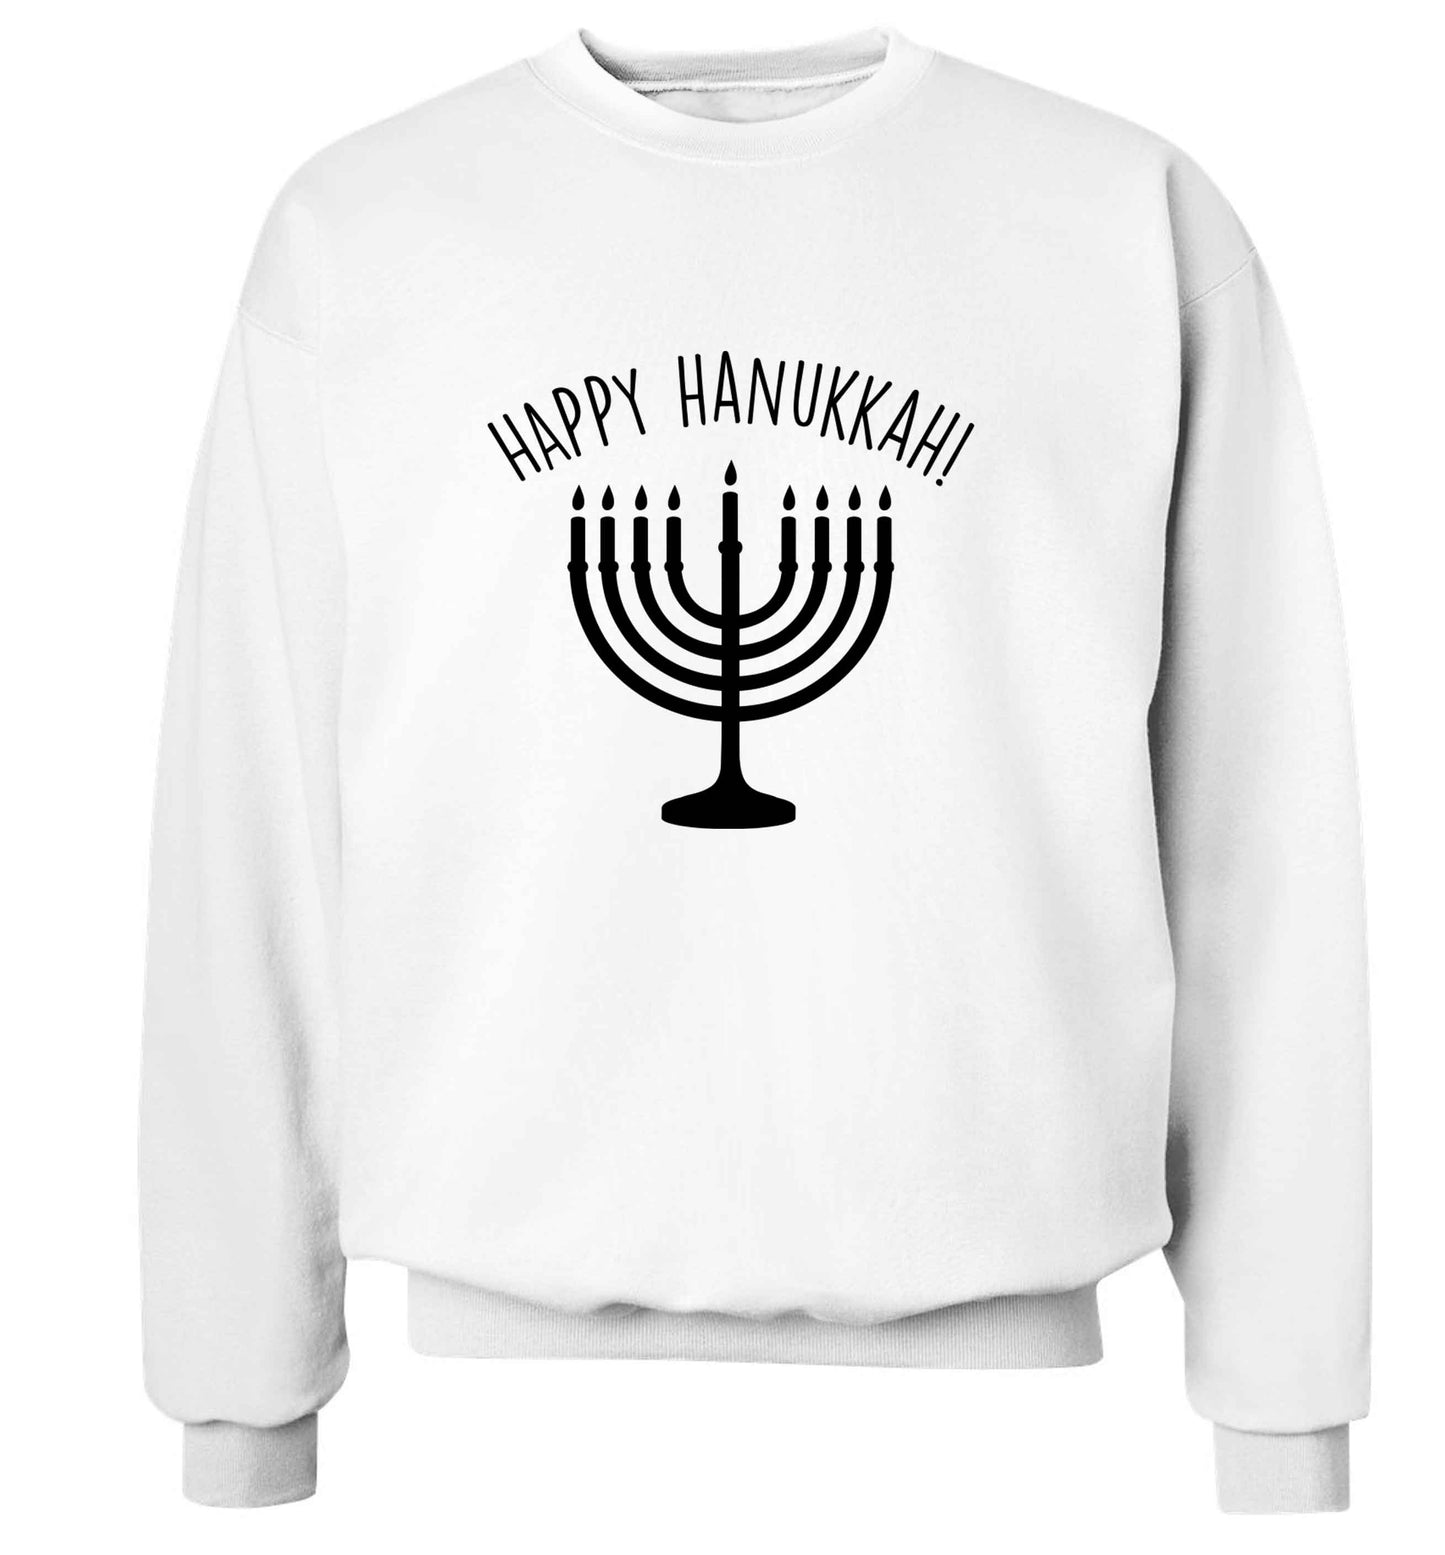 Happy hanukkah adult's unisex white sweater 2XL